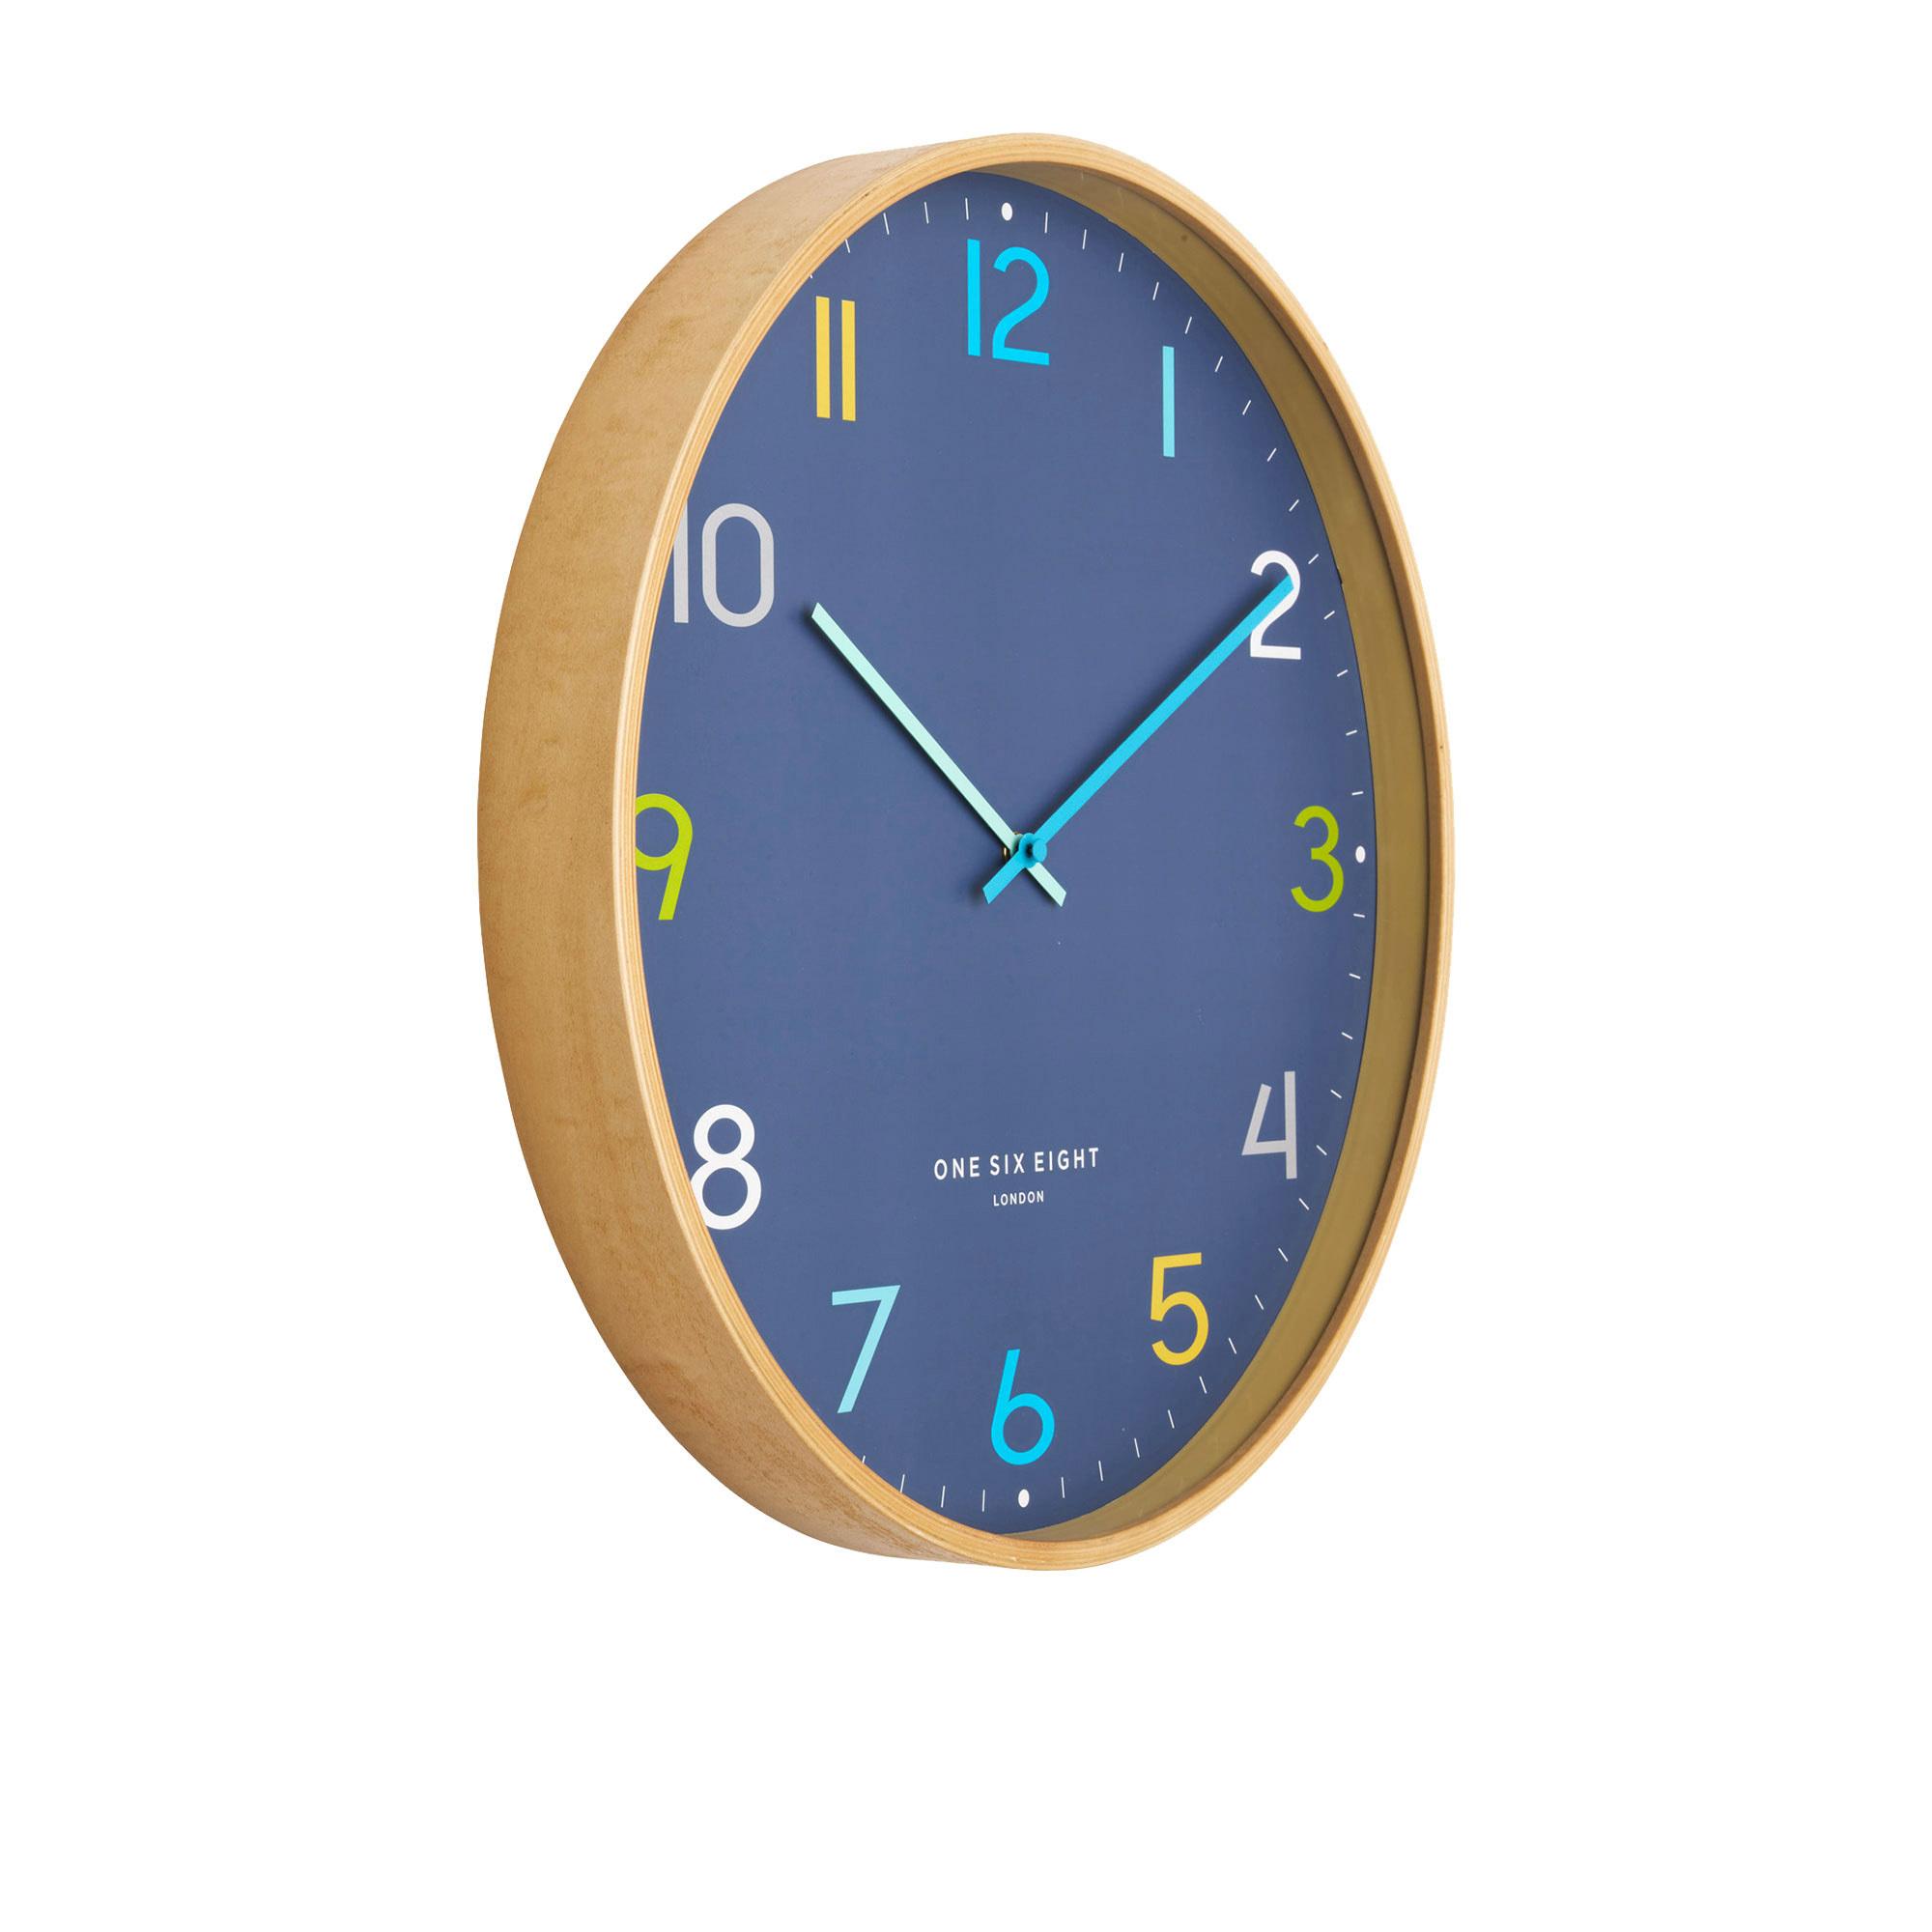 One Six Eight London Dream Silent Wall Clock 53cm Navy Image 2